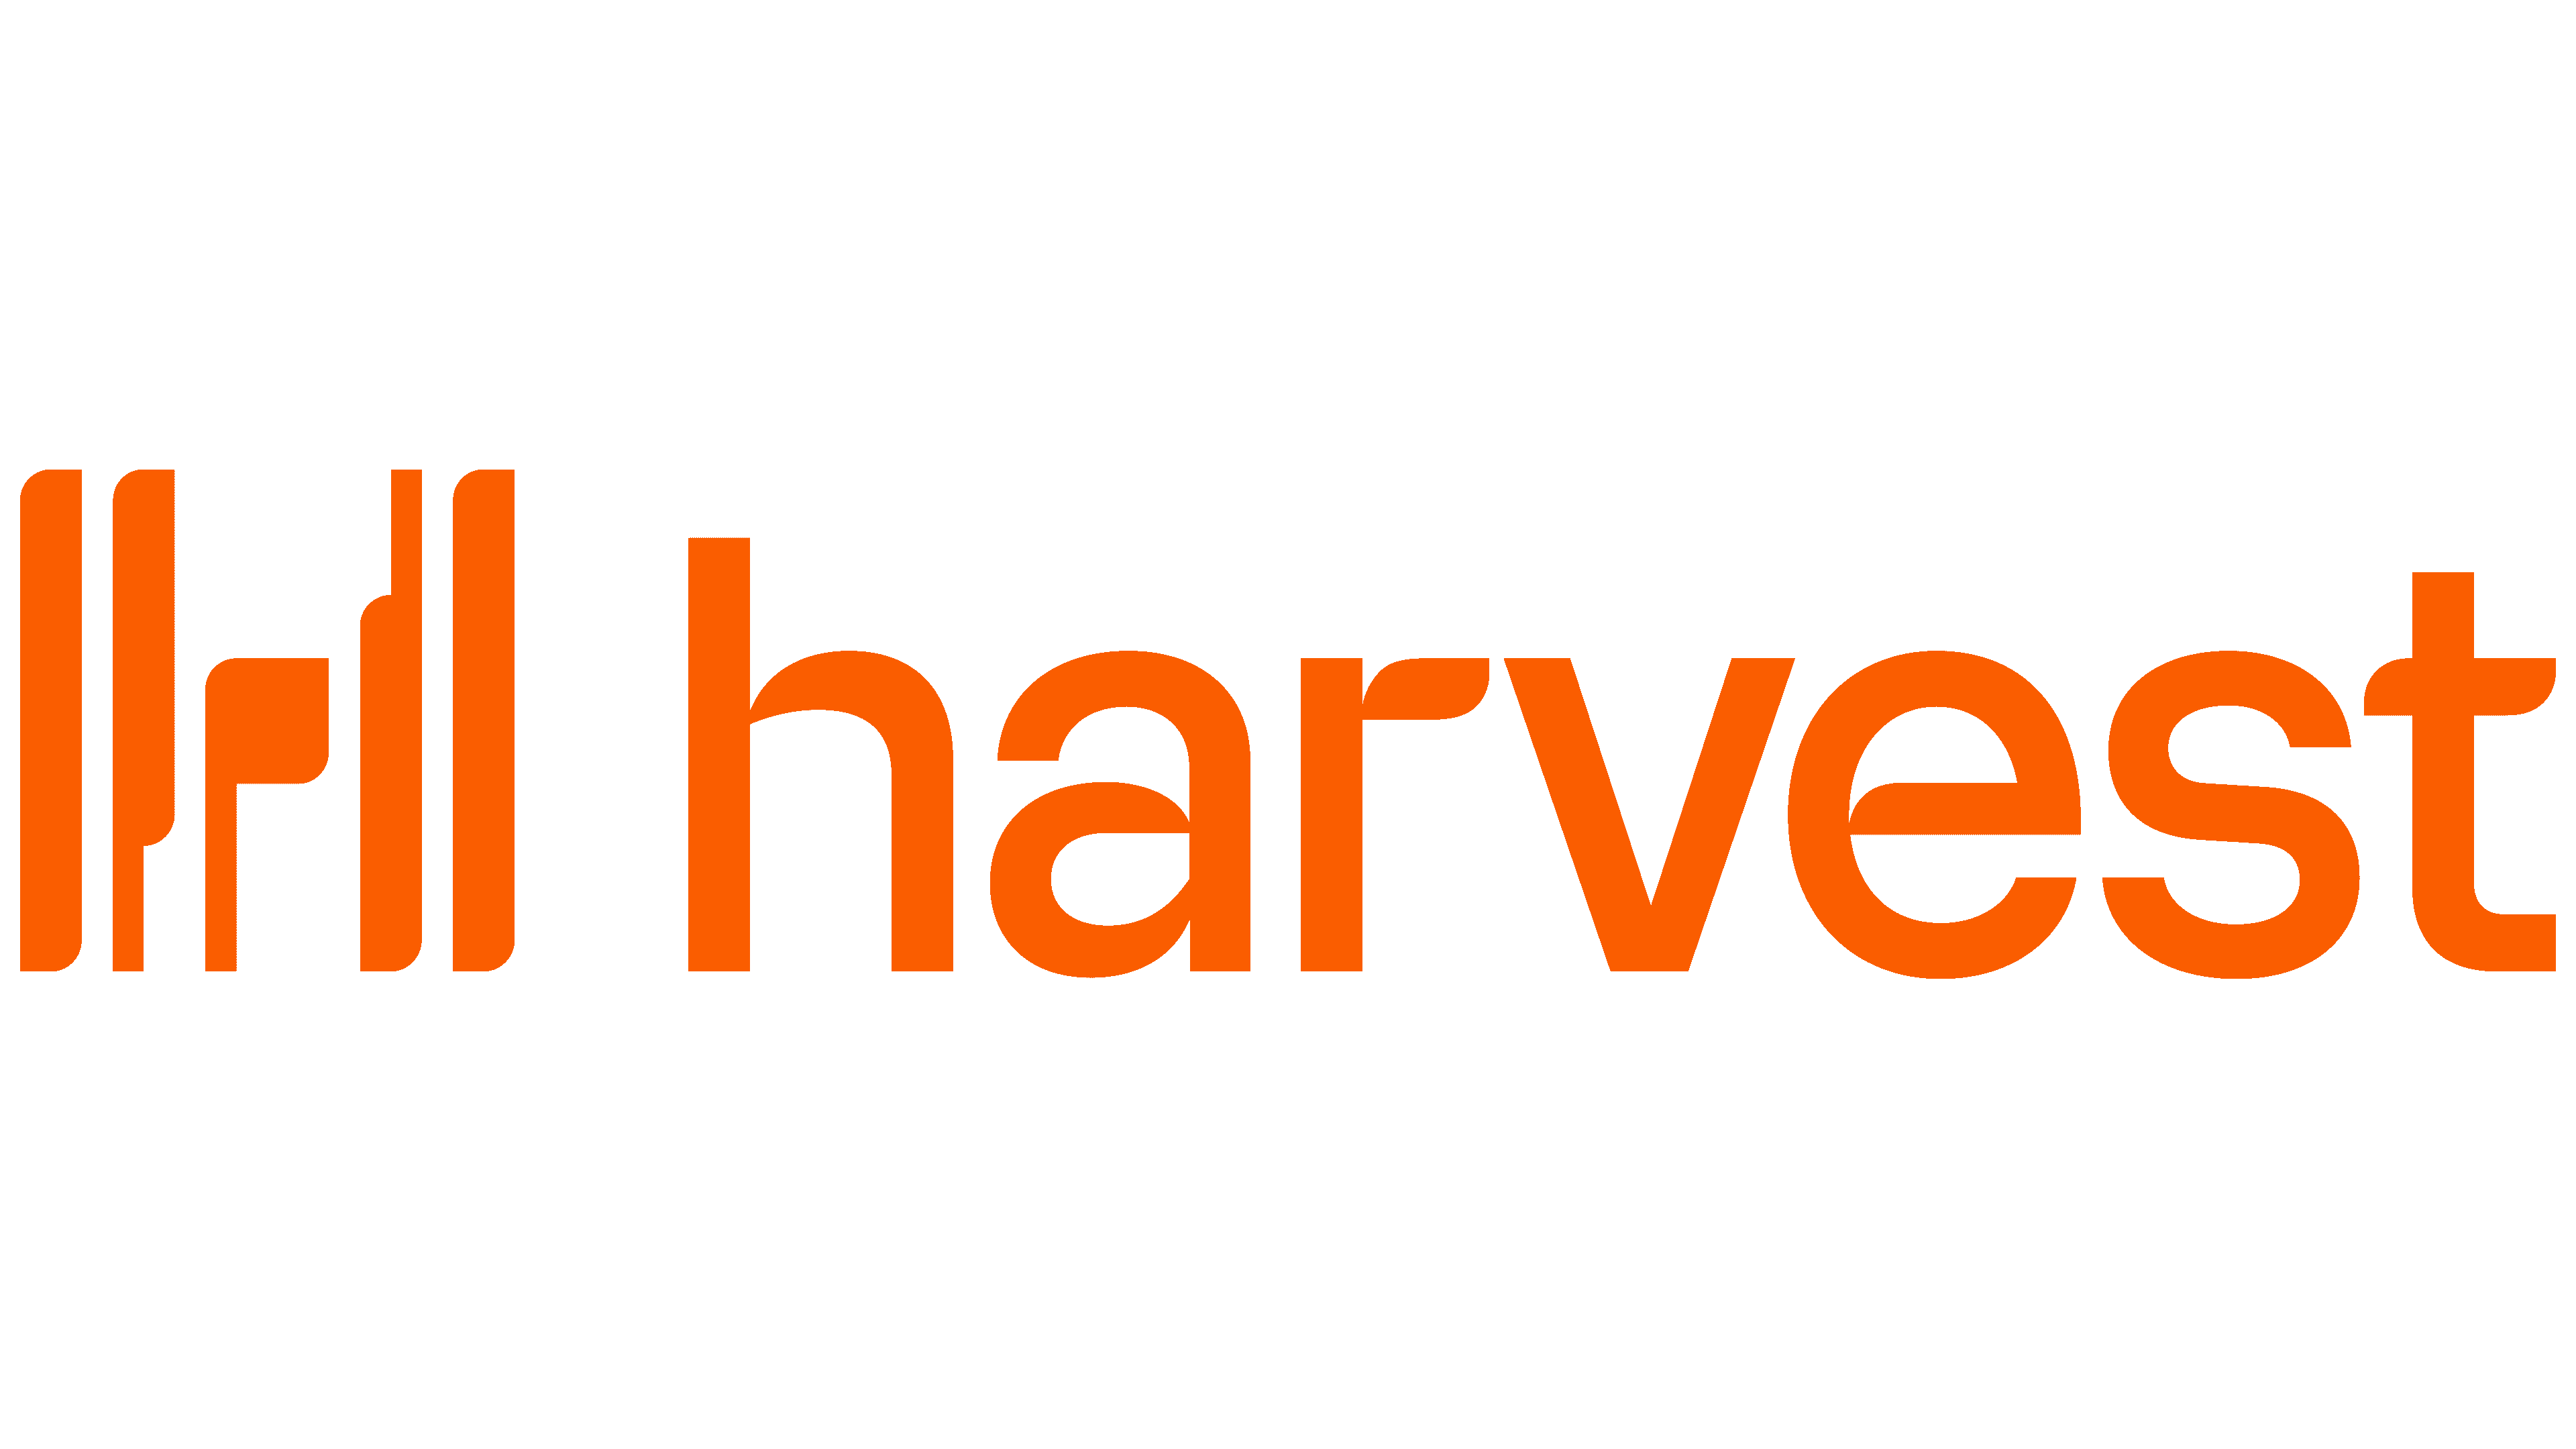 harvest-application-template